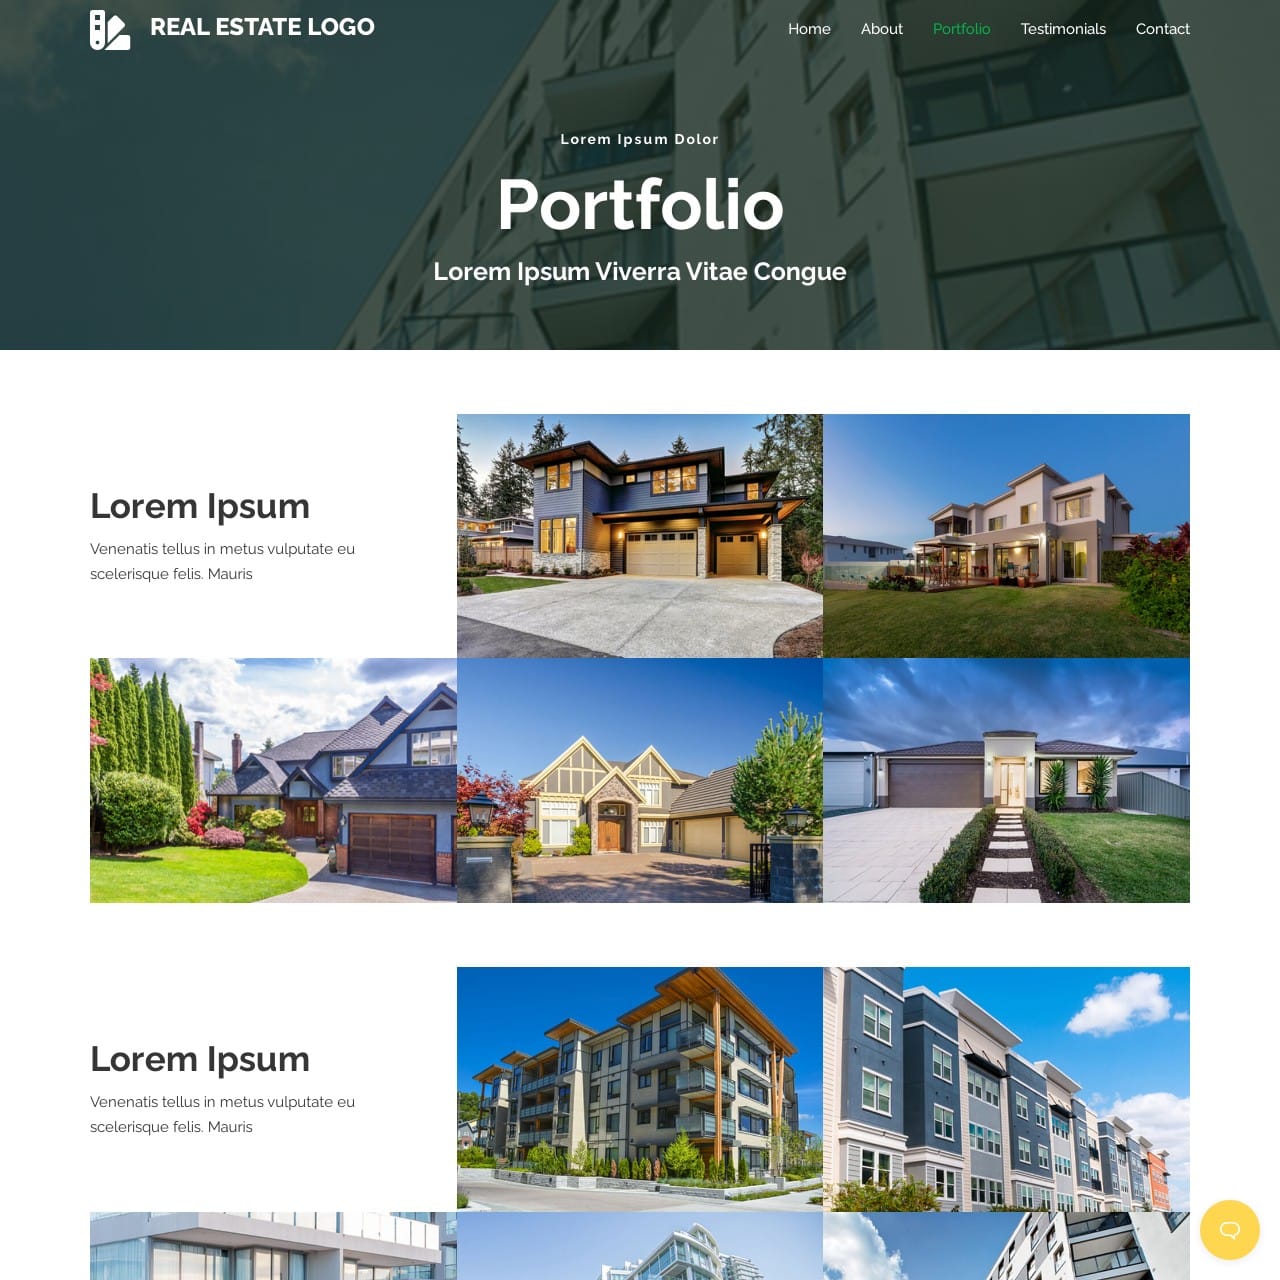 Real Estate Template - Portfolio Page